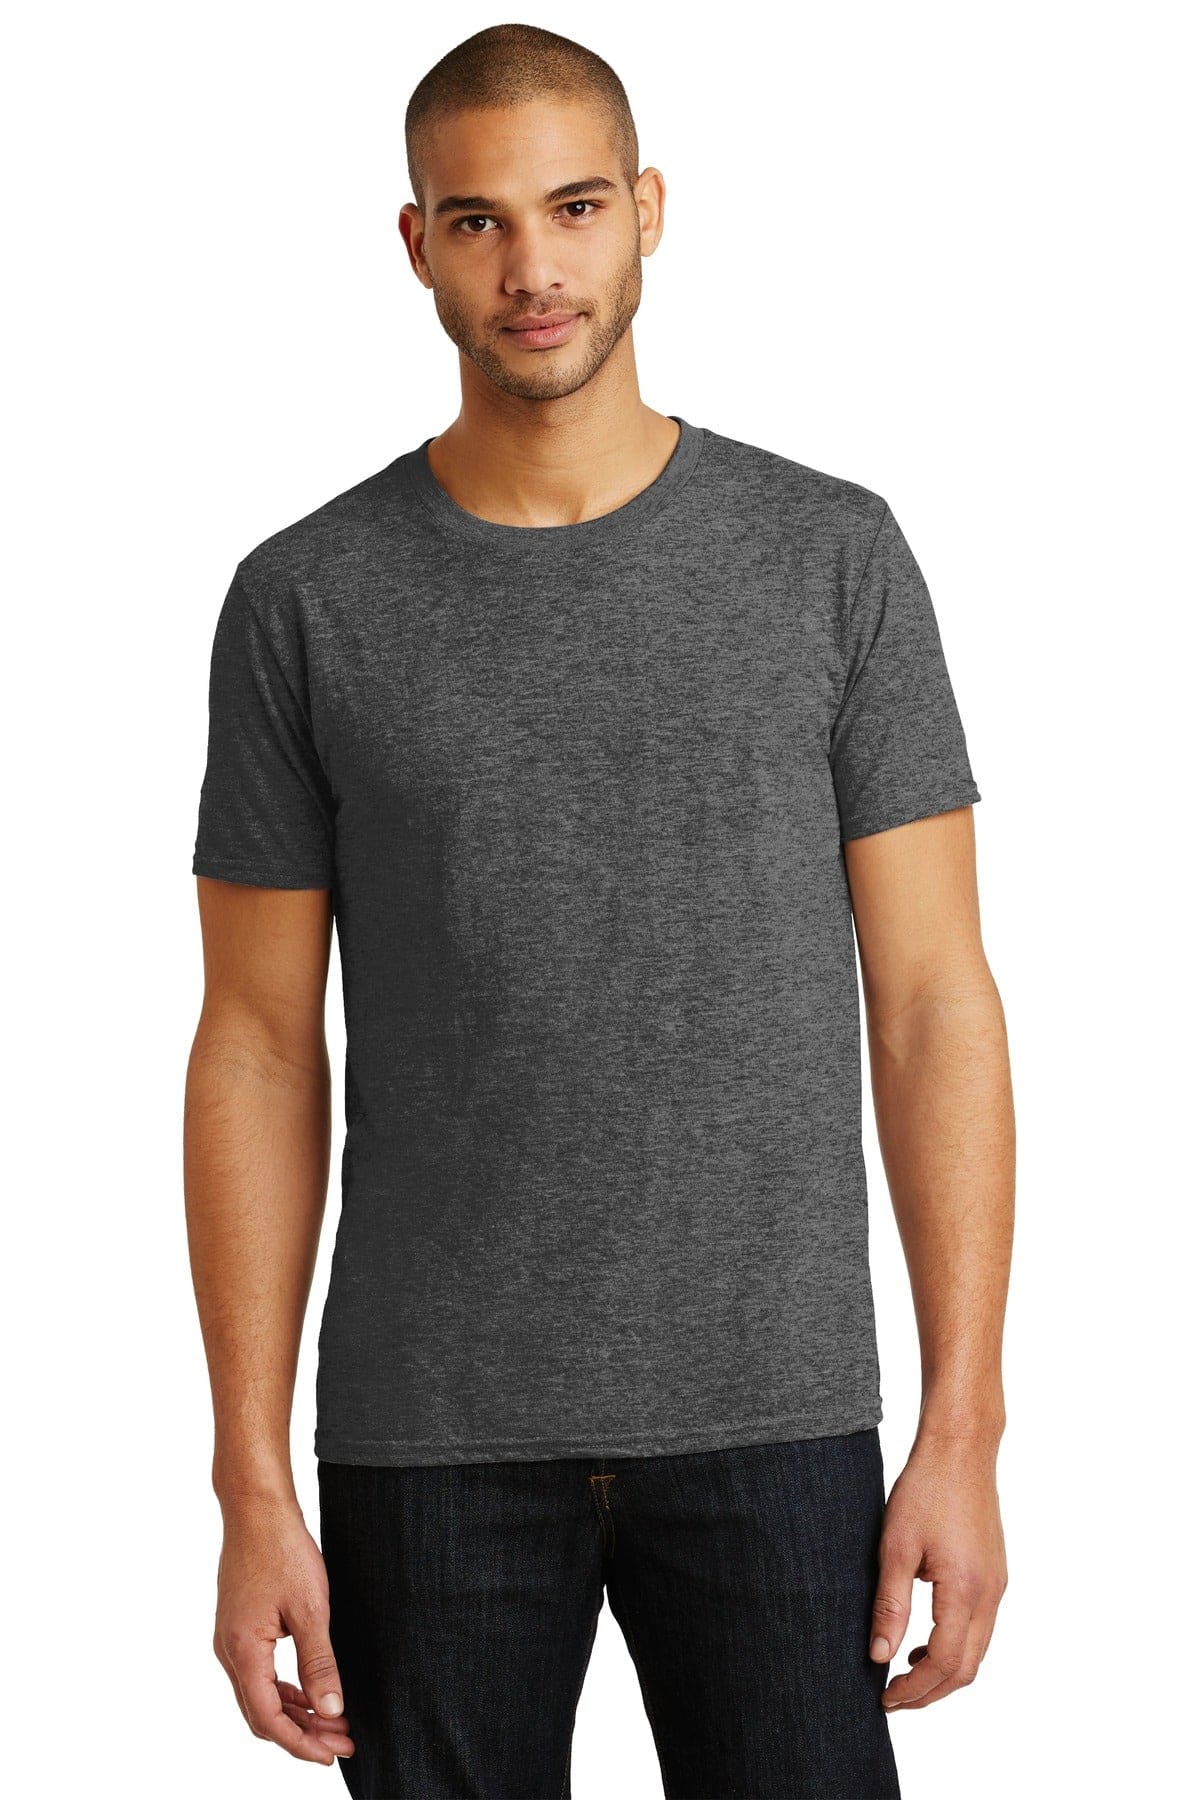 Gildan Tri - blend Tee 6750 - Activewear T - Tops / Shirtss